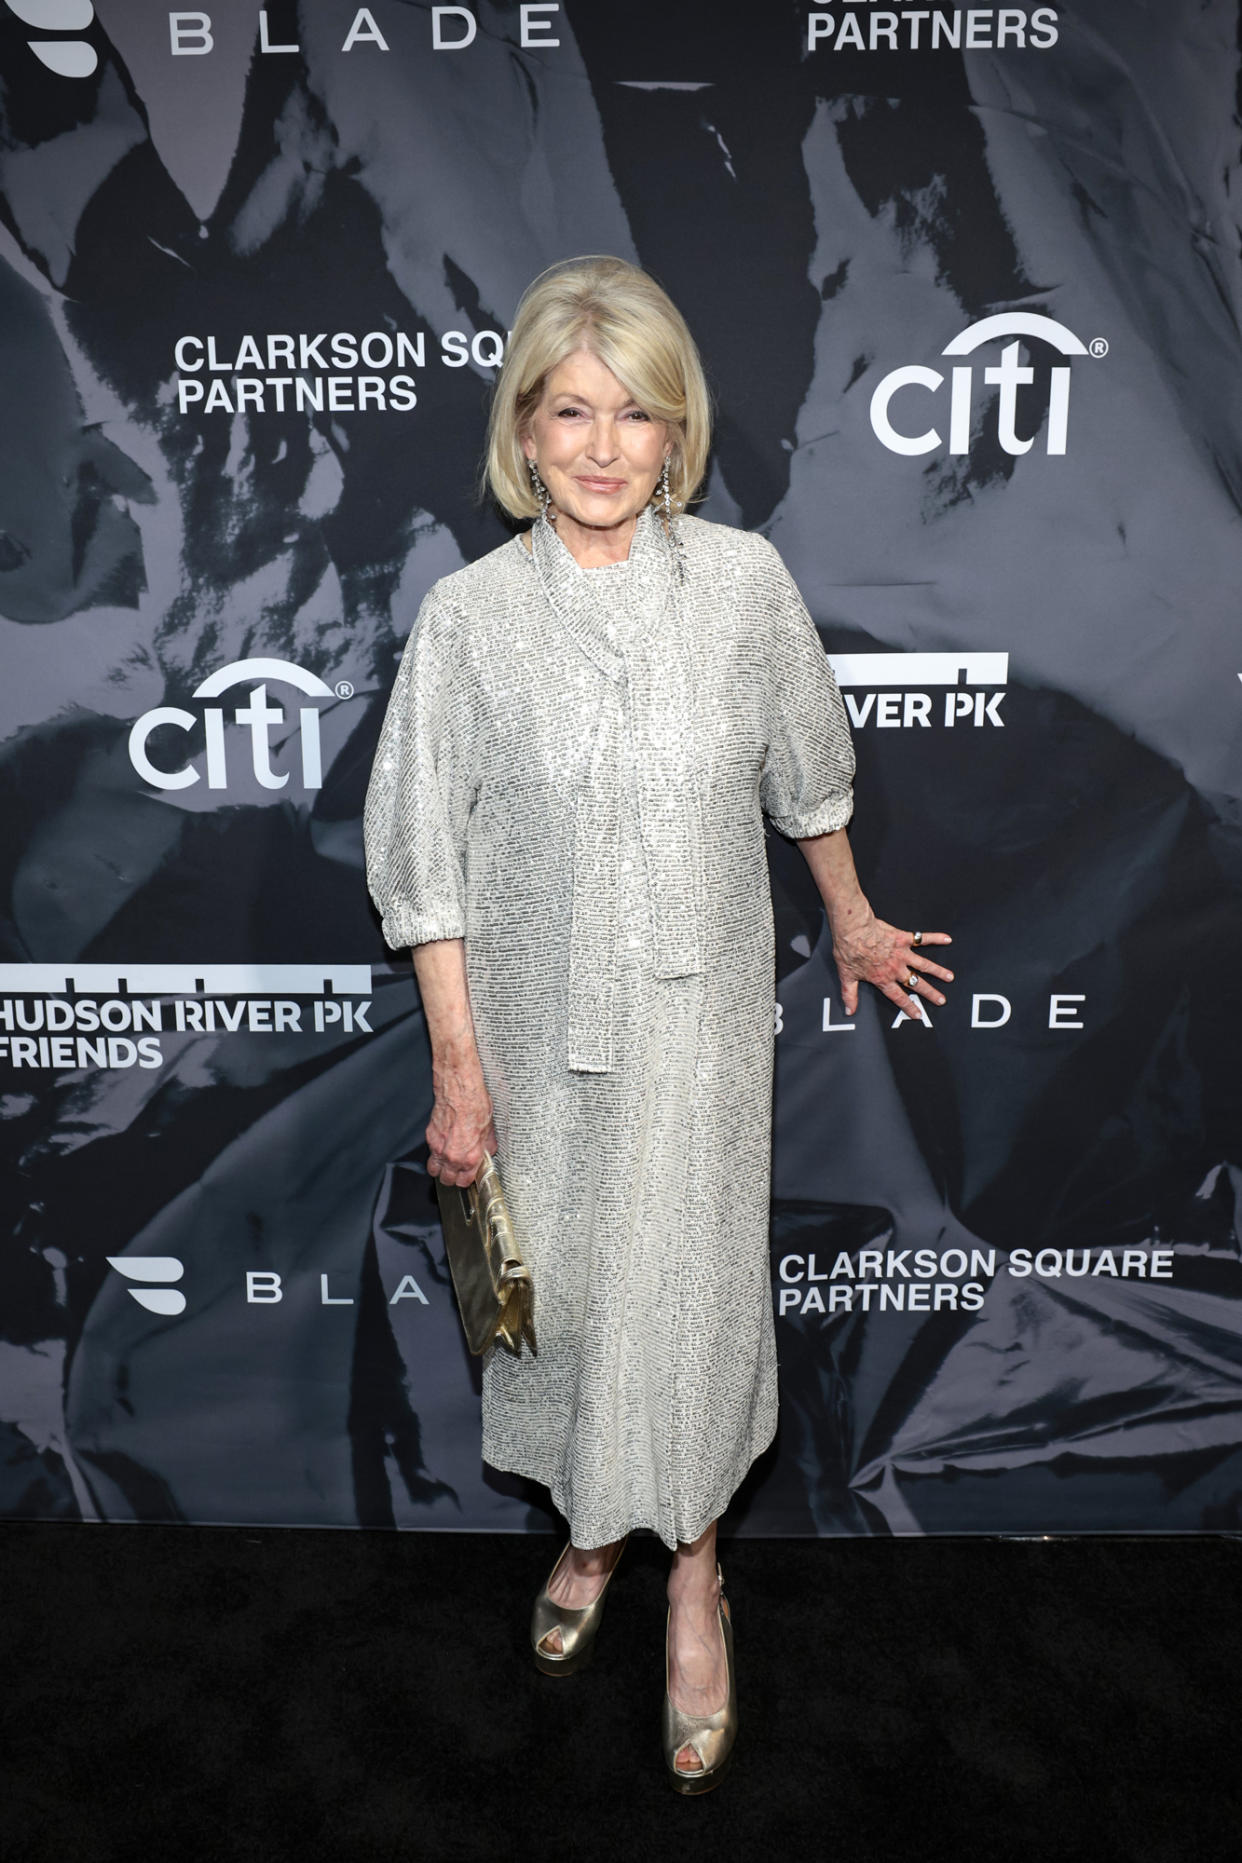 Martha Stewart Shows Off Her Legs in High-Slit Metallic Dress FEAT